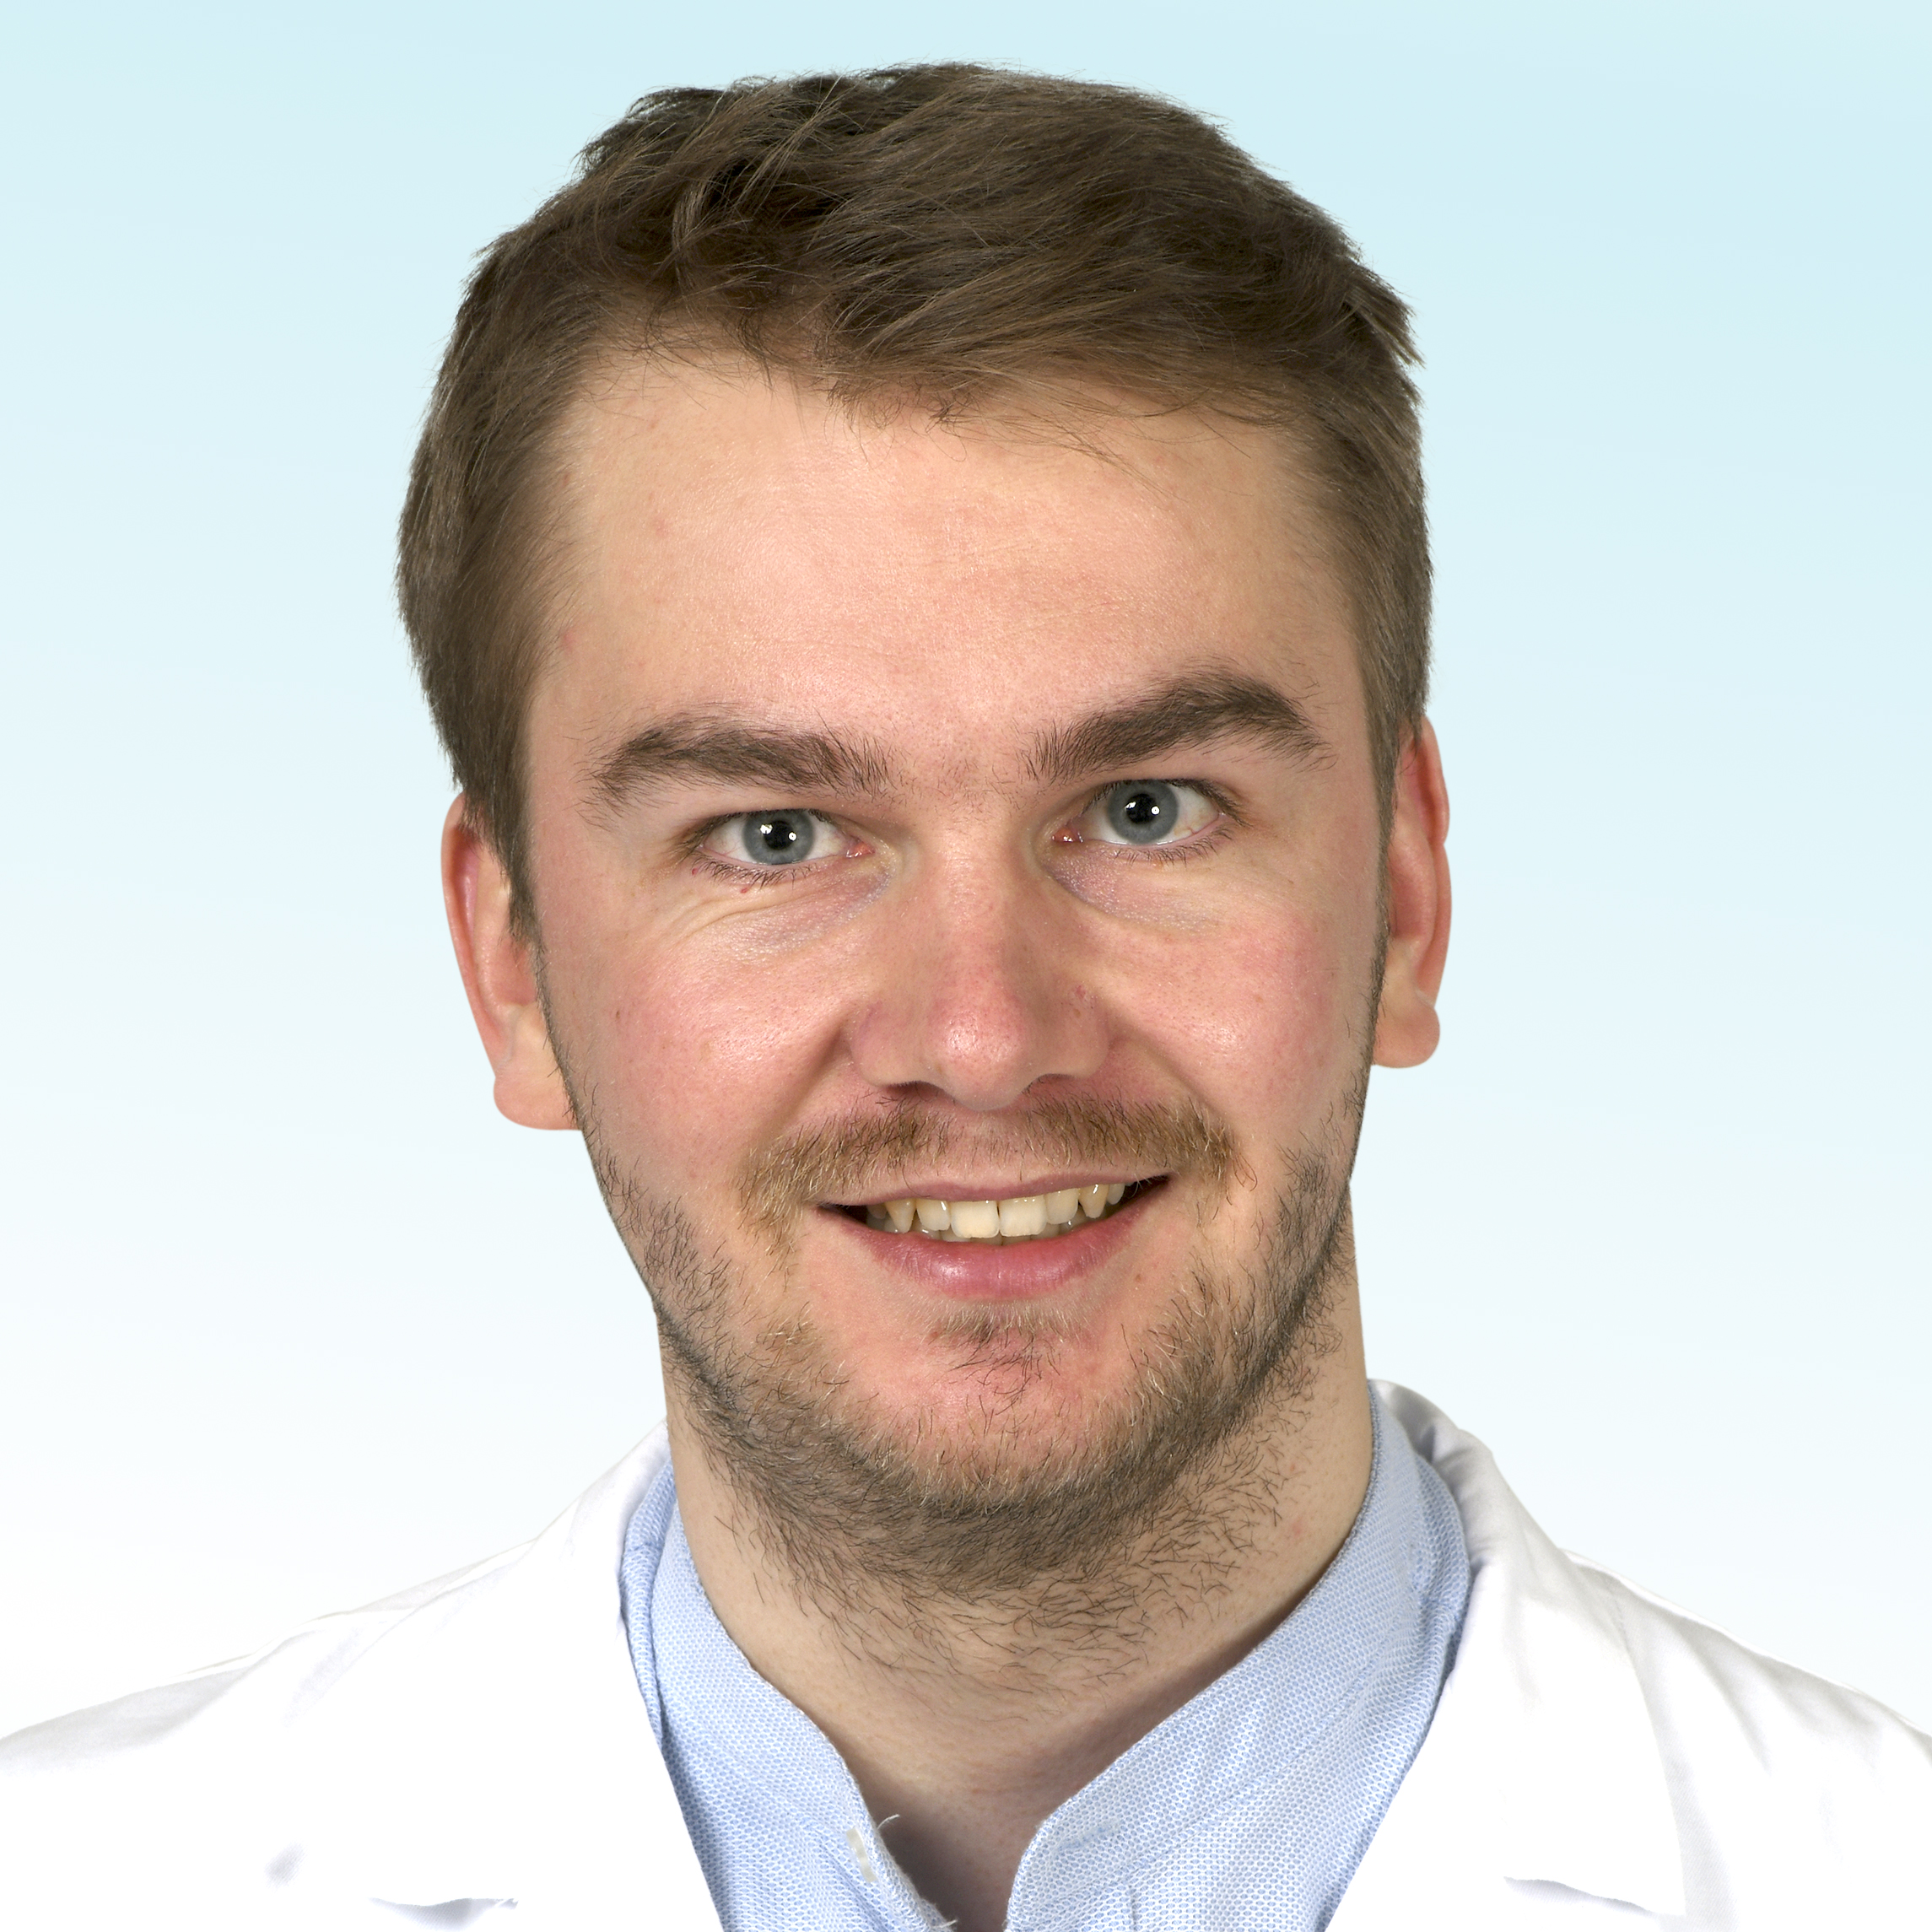 Dermatologue, Dr. med. Christian Greis